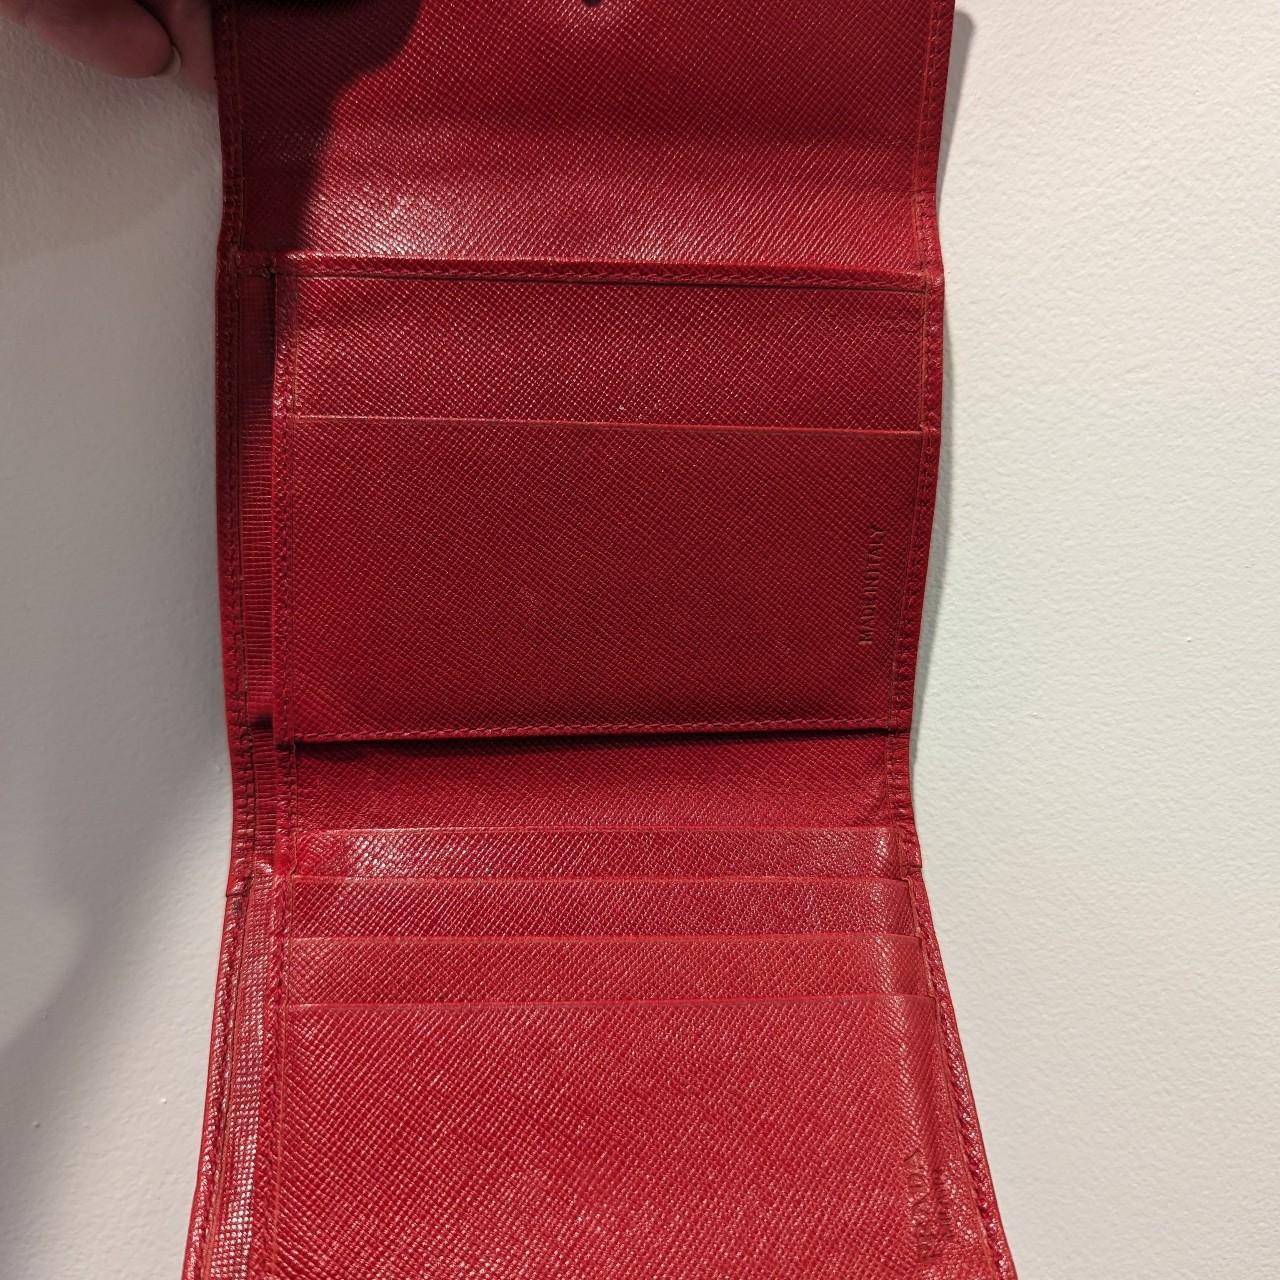 Authentic Prada red wallet. Repop here and decently... - Depop